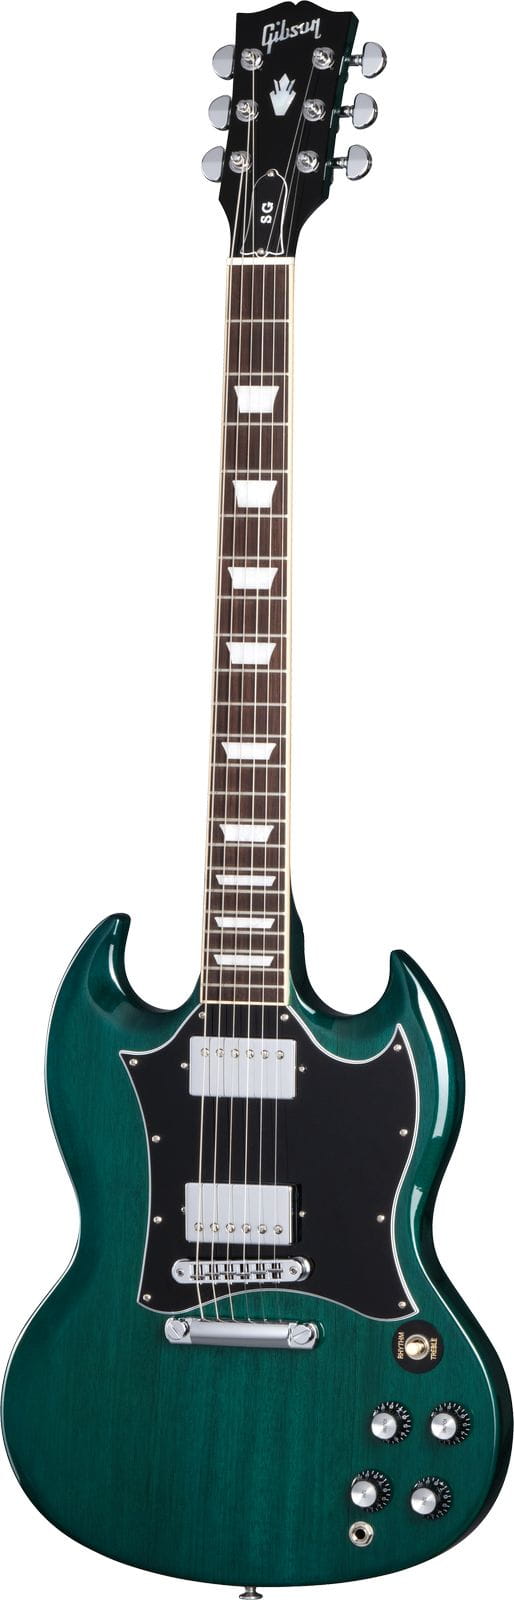 Gibson SG Standard Translucent Teal Gitara Elektryczna